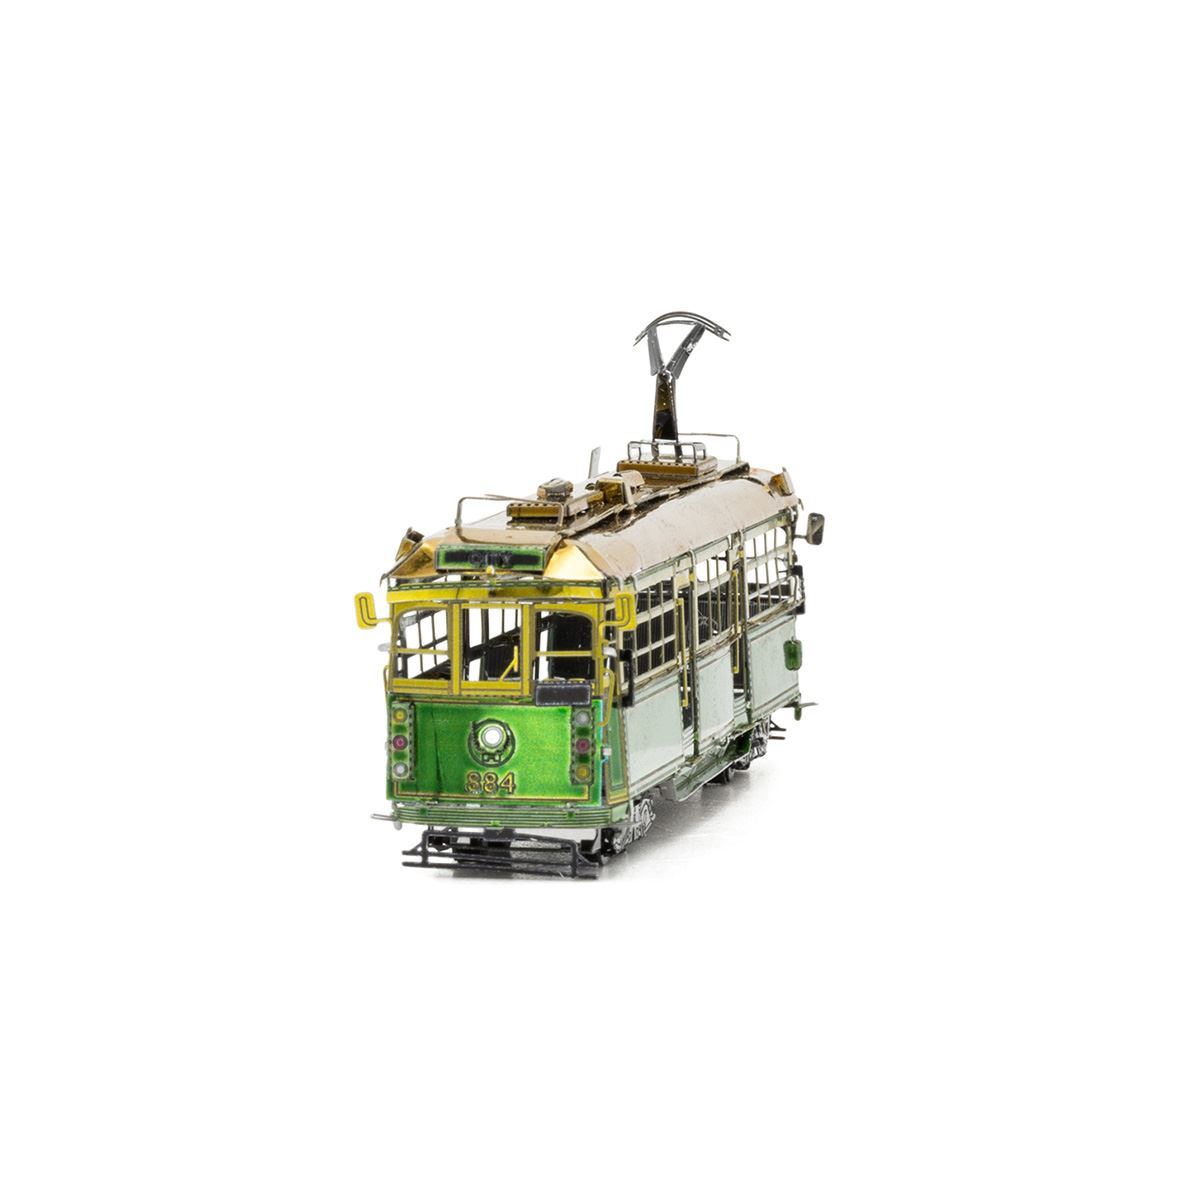 Tweezers 11586 Metal Earth Melbourne W-Class Tram 3D Metal Model 